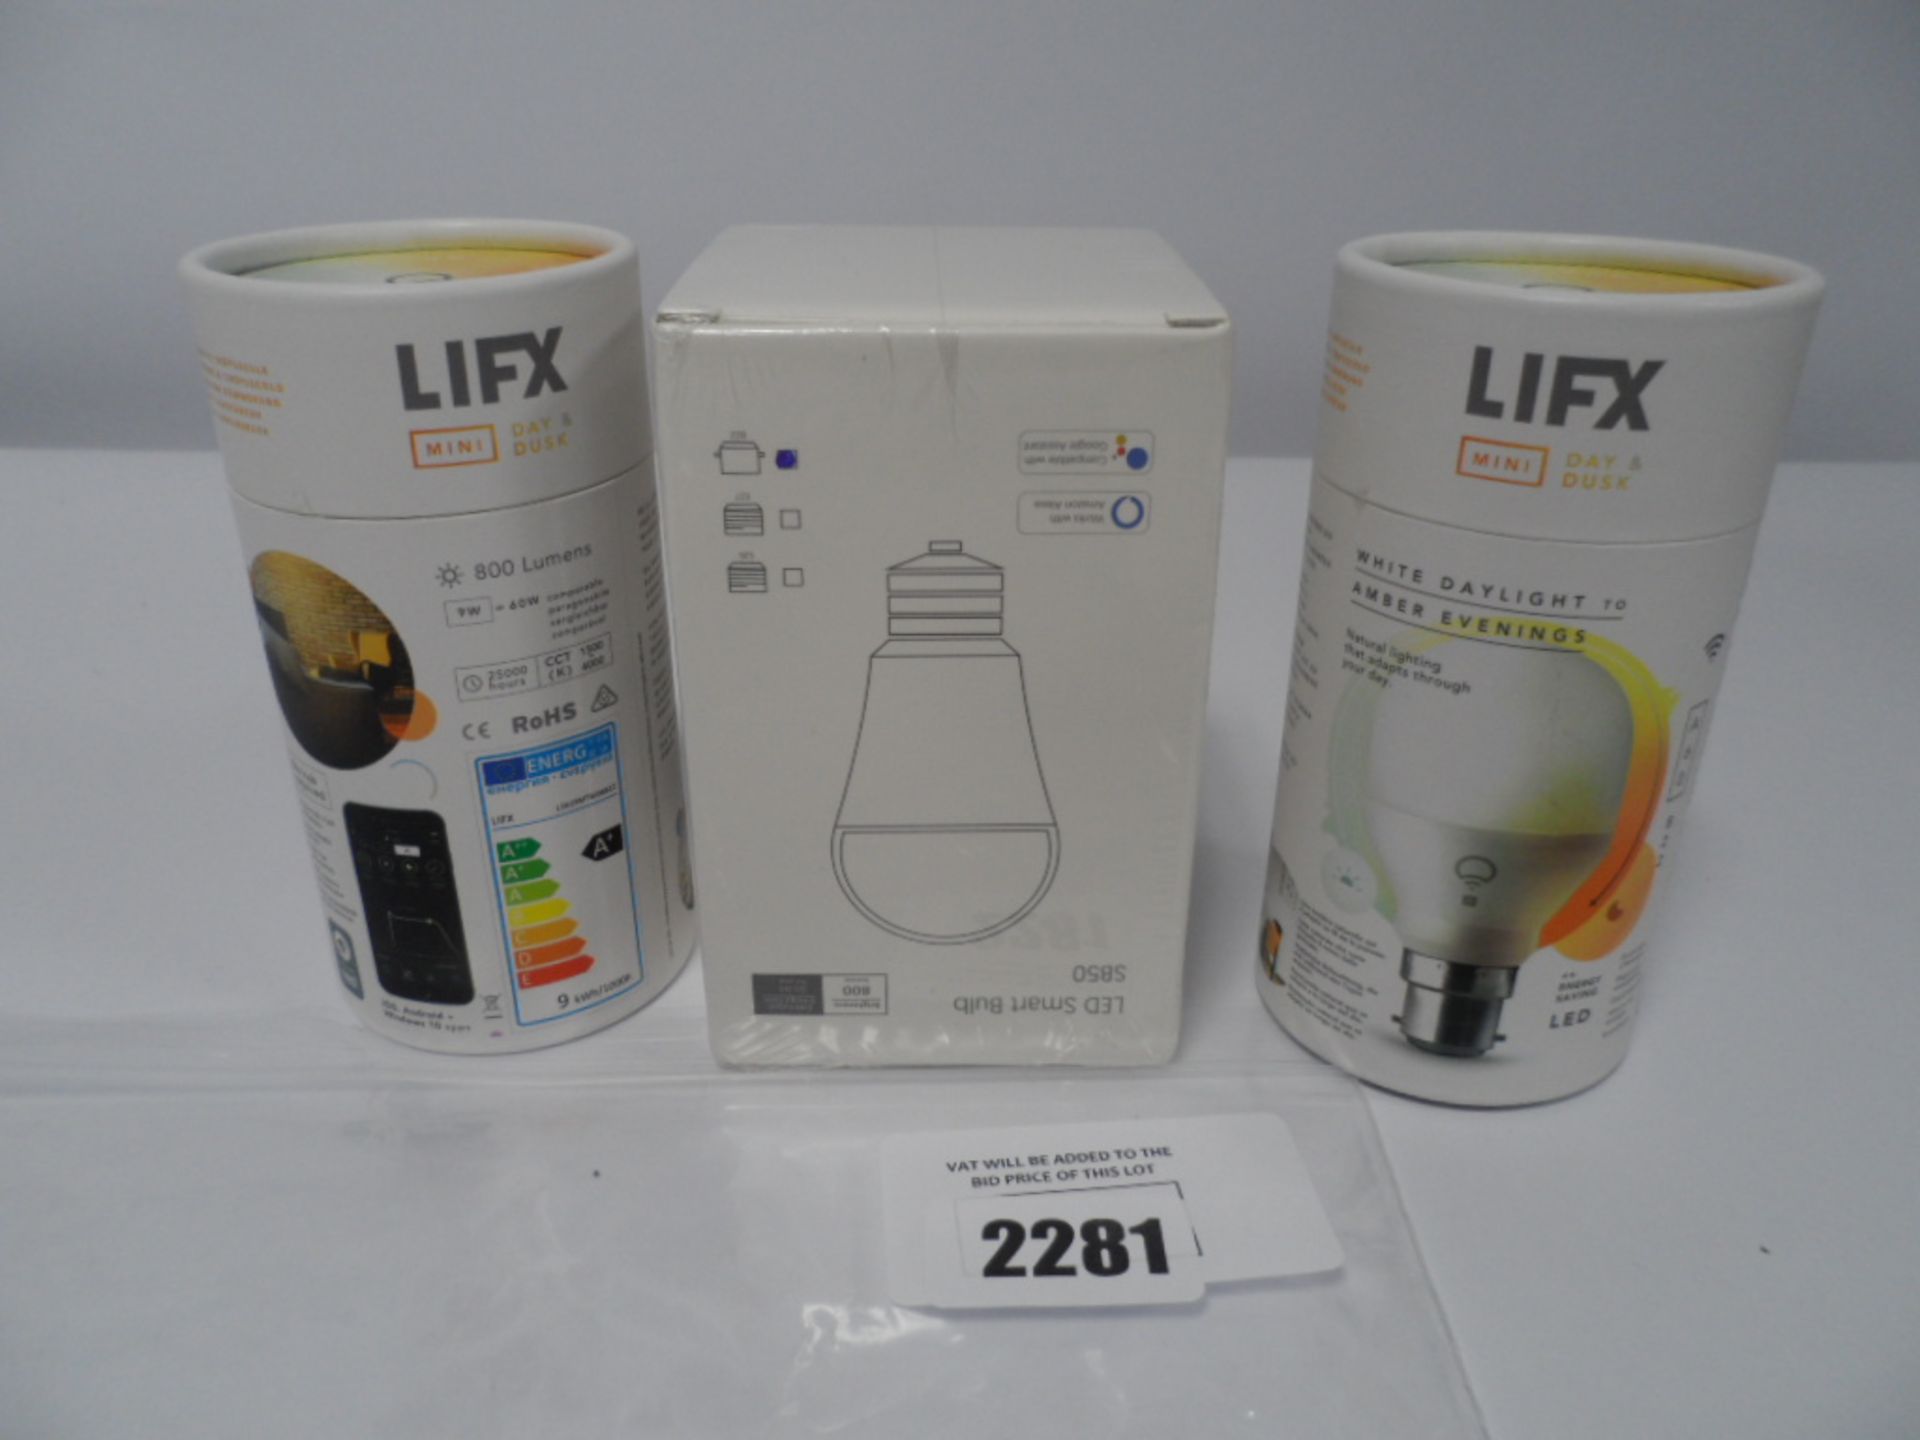 Lifx mini smart light bulbs, and a Teckin led smart bulb.